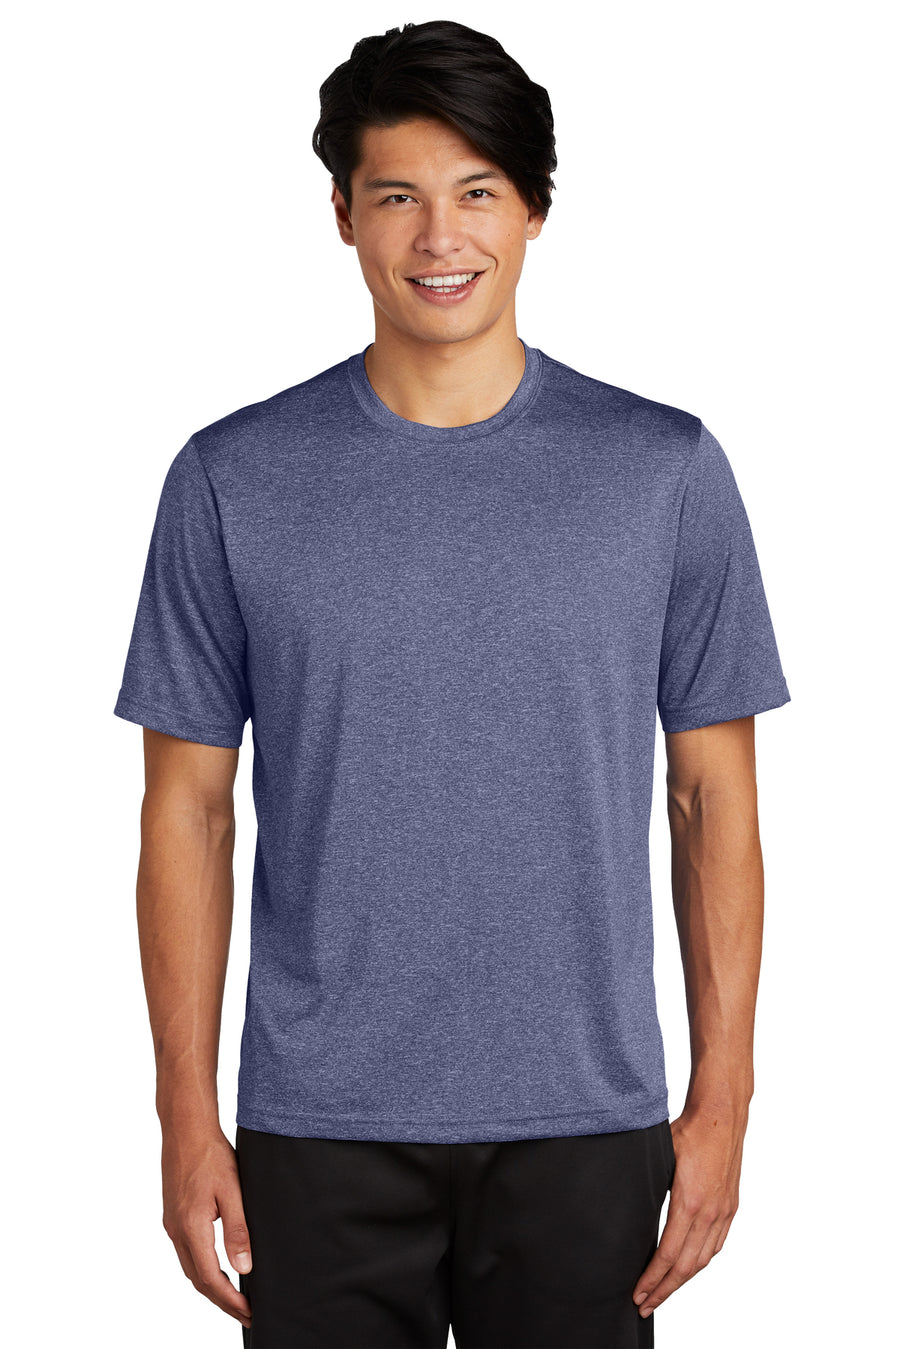 Men's Microfiber Heather T-Shirt (Short Sleeve)